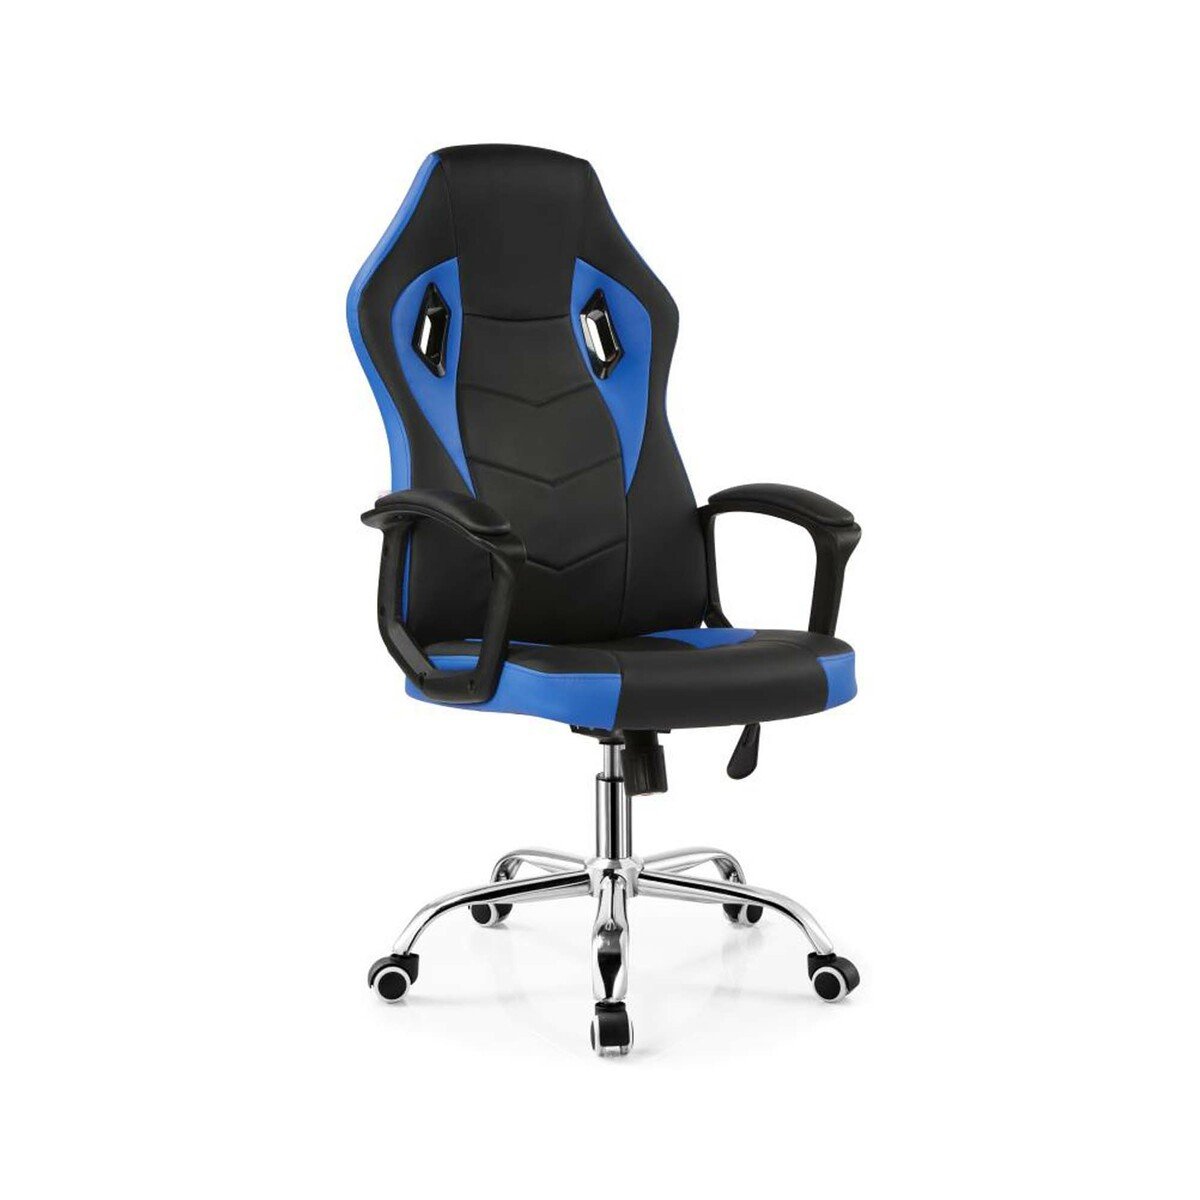 Maple Leaf High Back Gaming chair G202 Blue/Black